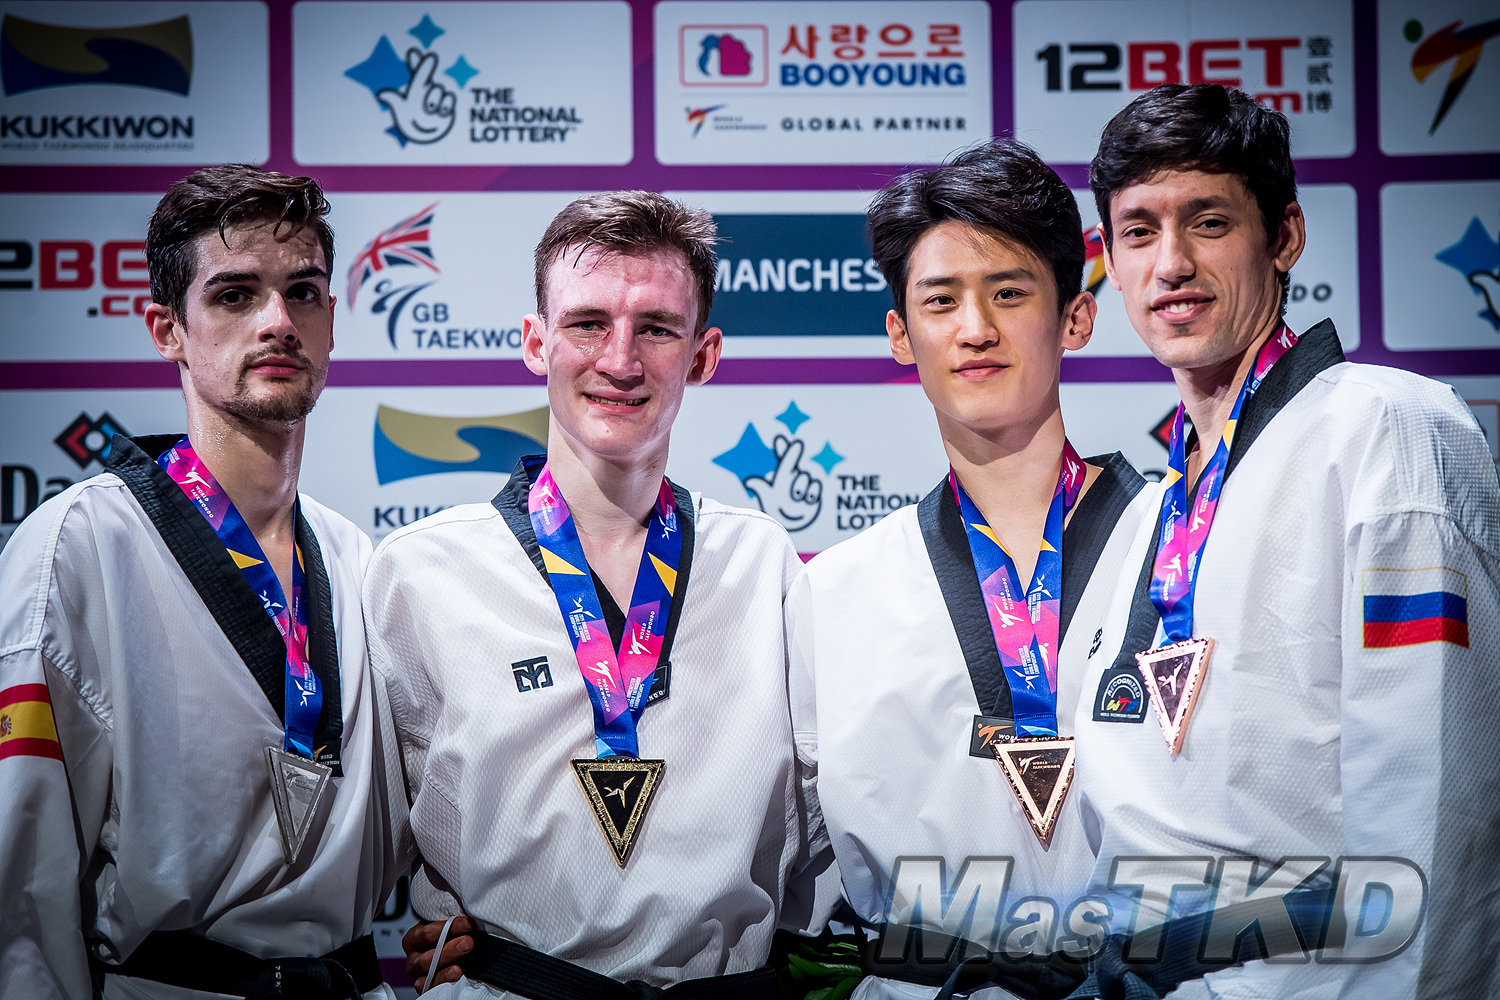 Podium_M-68_Manchester-2019-World-Taekwondo-Championships_mT